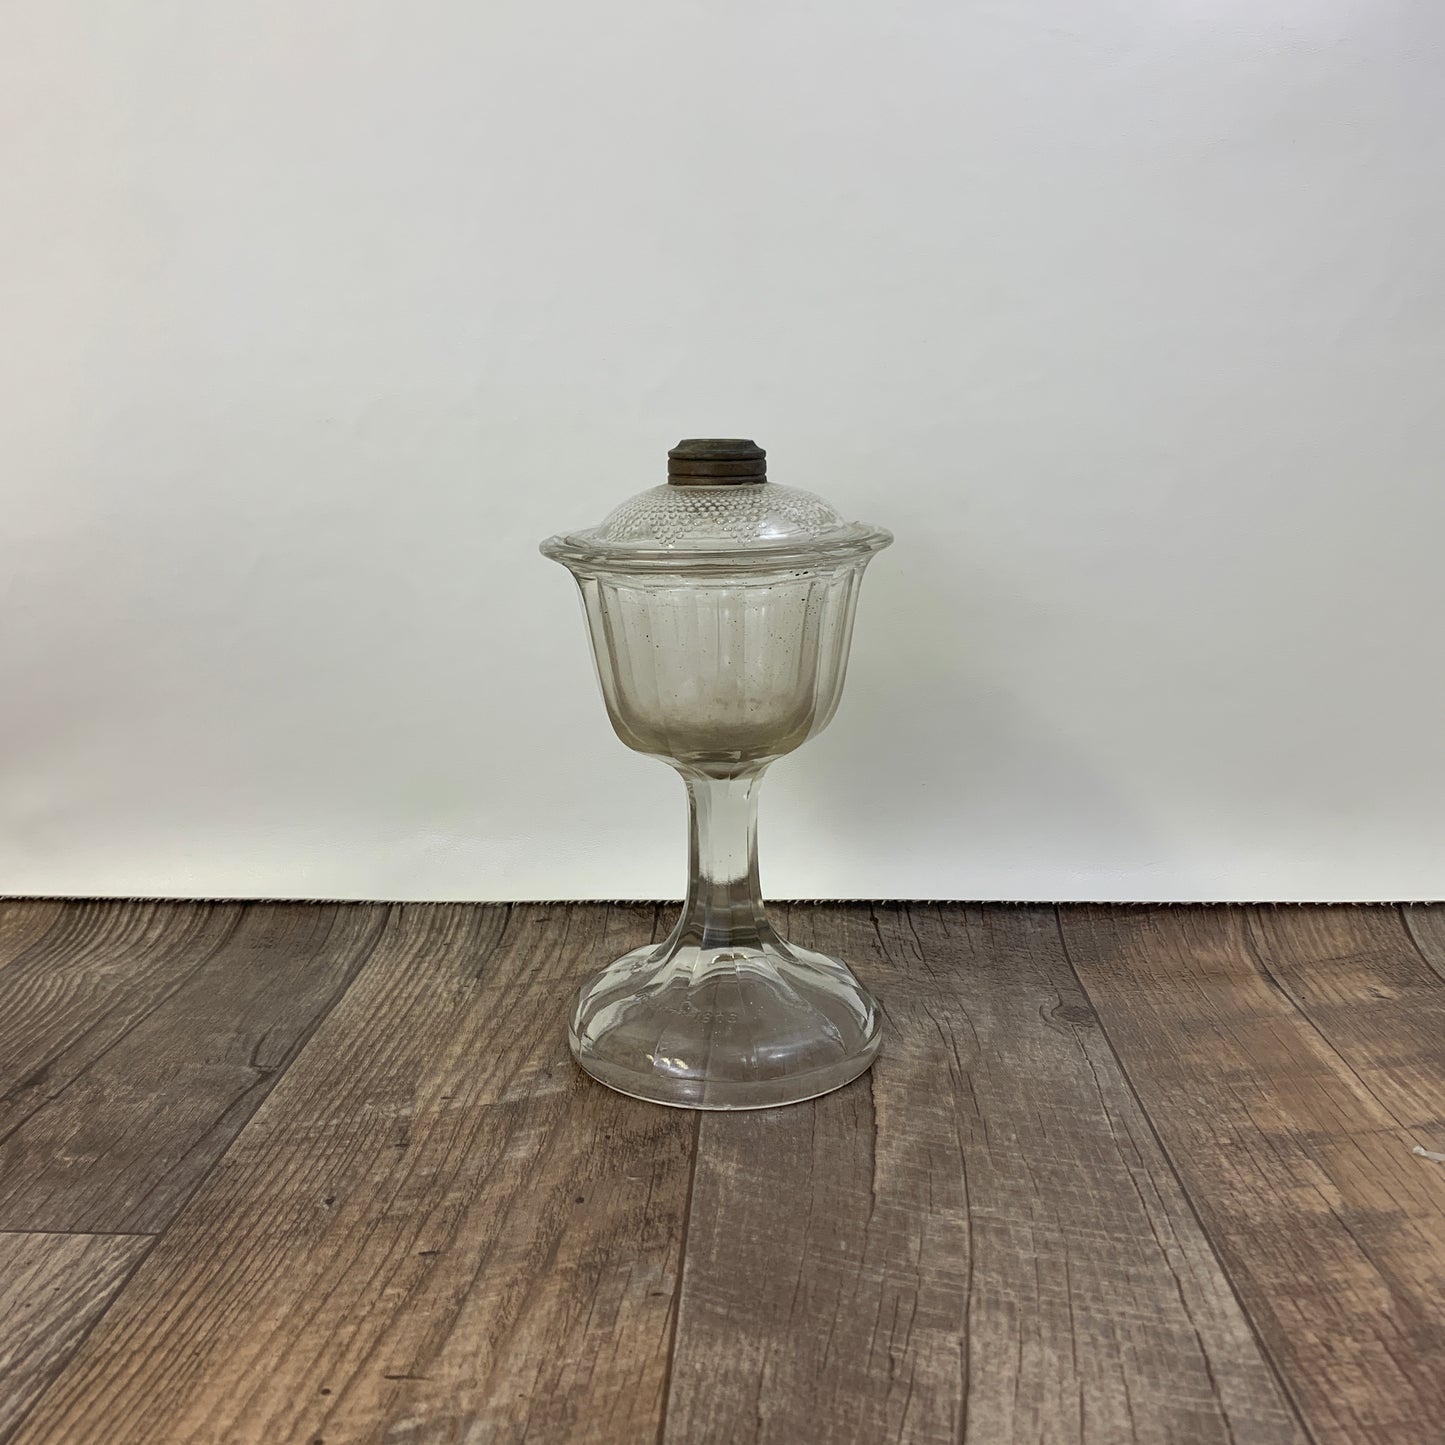 Antique Pedestal Oil Lamp Base - Chipped, Antique Farmhouse Decor Tall Glass Oil Lamp